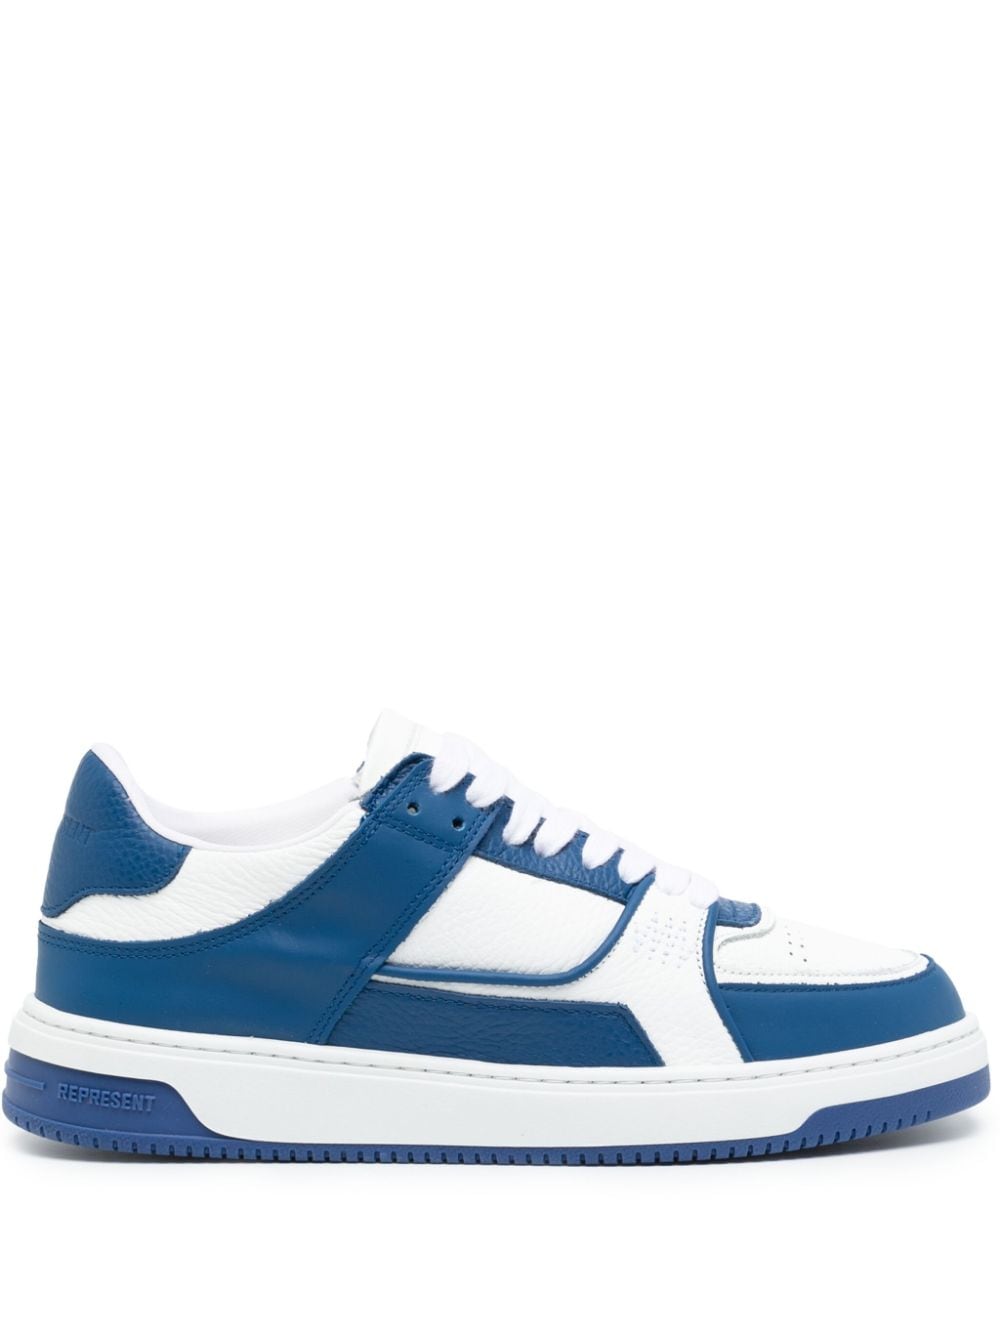 Represent Apex leren sneakers - Blauw